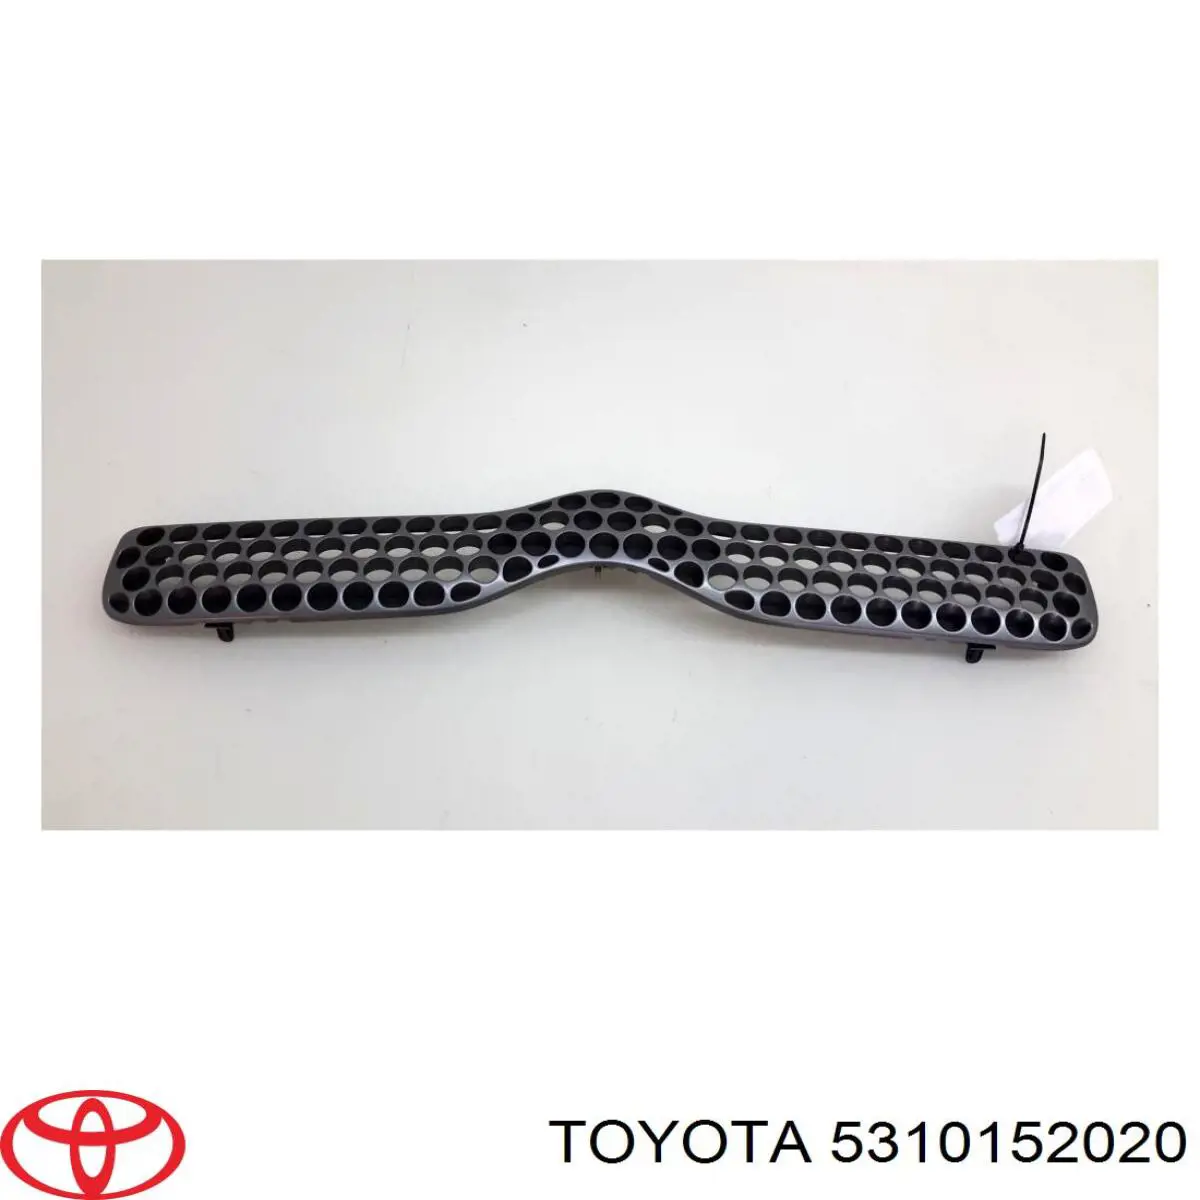 5310152020 Toyota parrilla